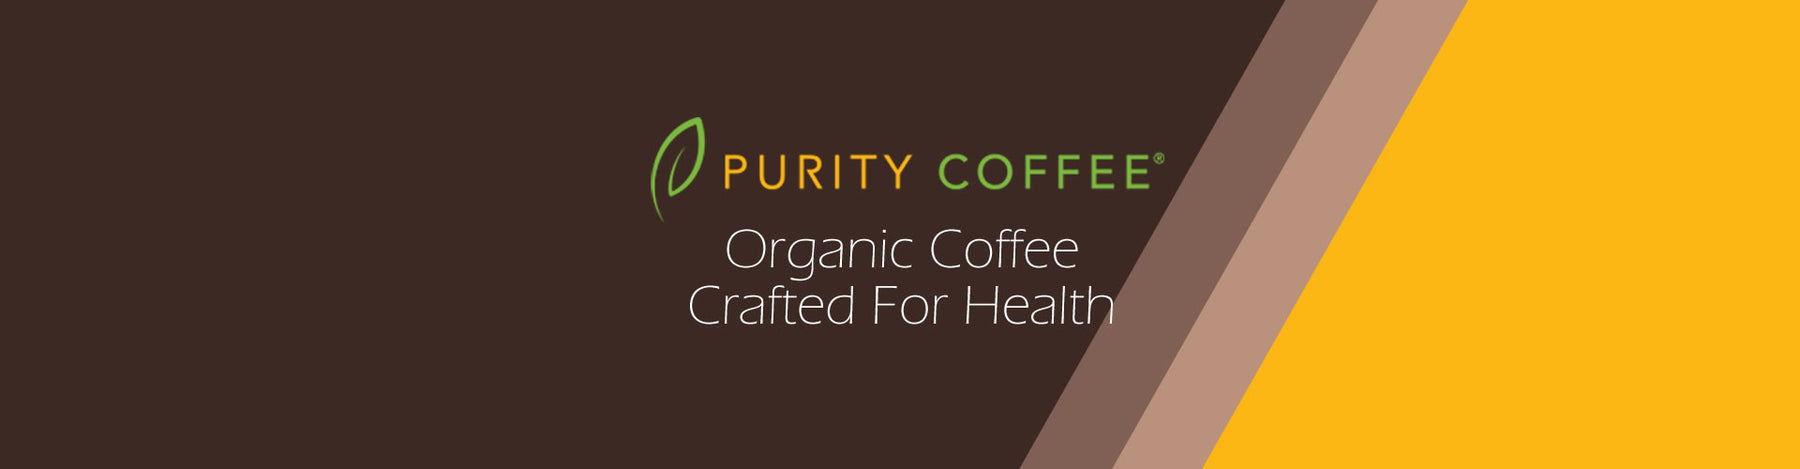 purity-organic-coffee-blog